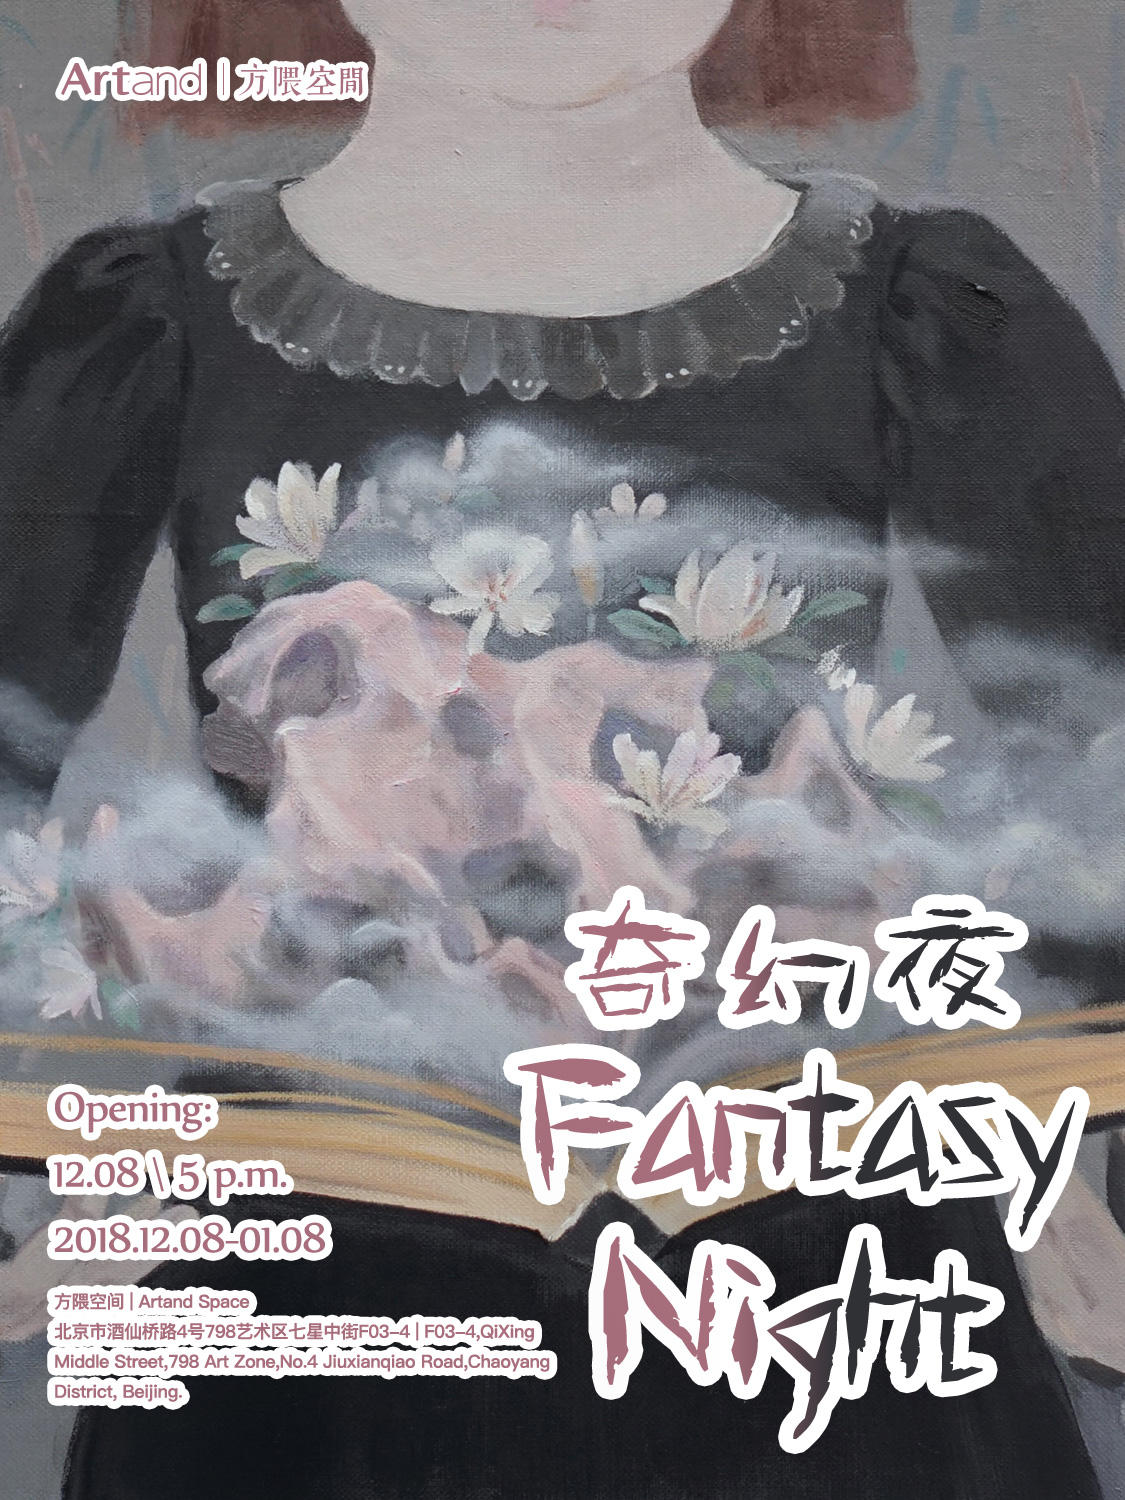 展讯 | 奇幻夜“Fantasy Night”将于本周六8号开幕